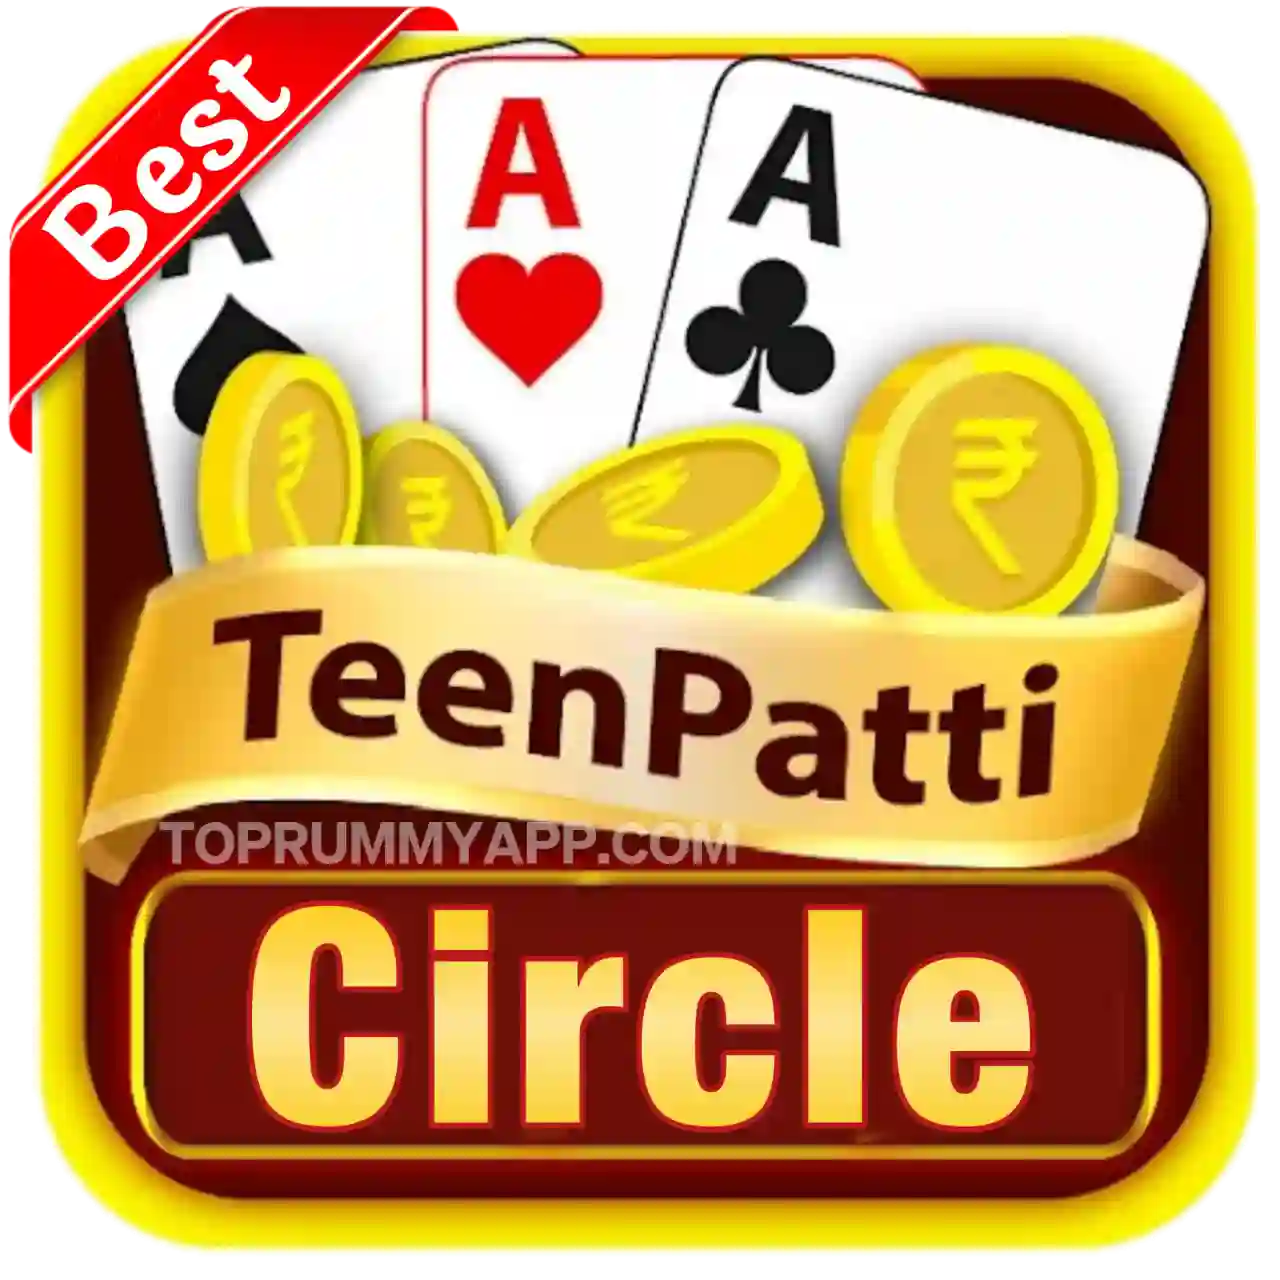 Teen Patti Circle Apk Download - Teen Patti Win Pro Apk Download